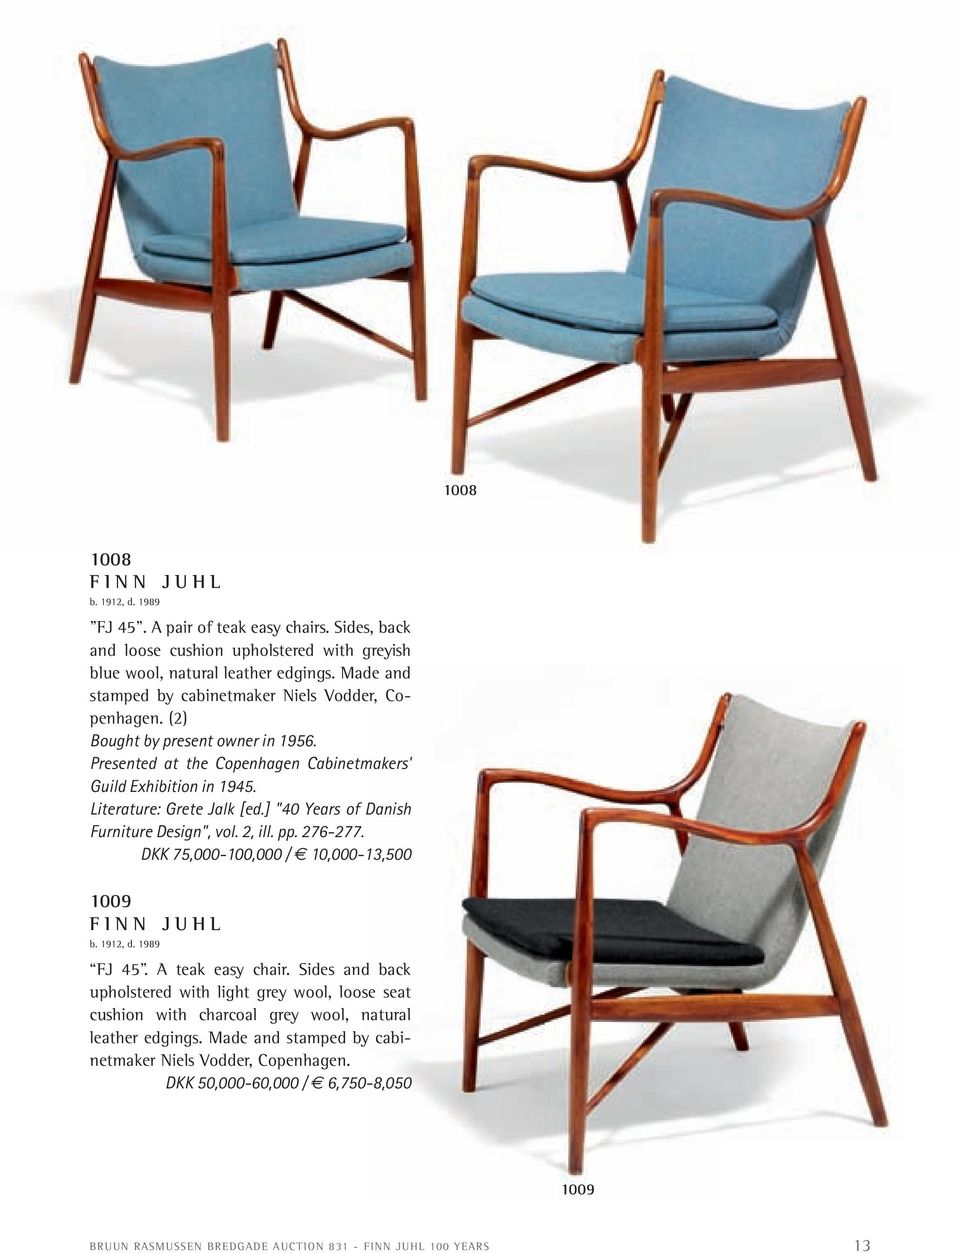 Literature: Grete Jalk [ed.] "40 Years of Danish Furniture Design", vol. 2, ill. pp. 276-277. DKK 75,000-100,000 / 10,000-13,500 1009 fj 45. a teak easy chair.